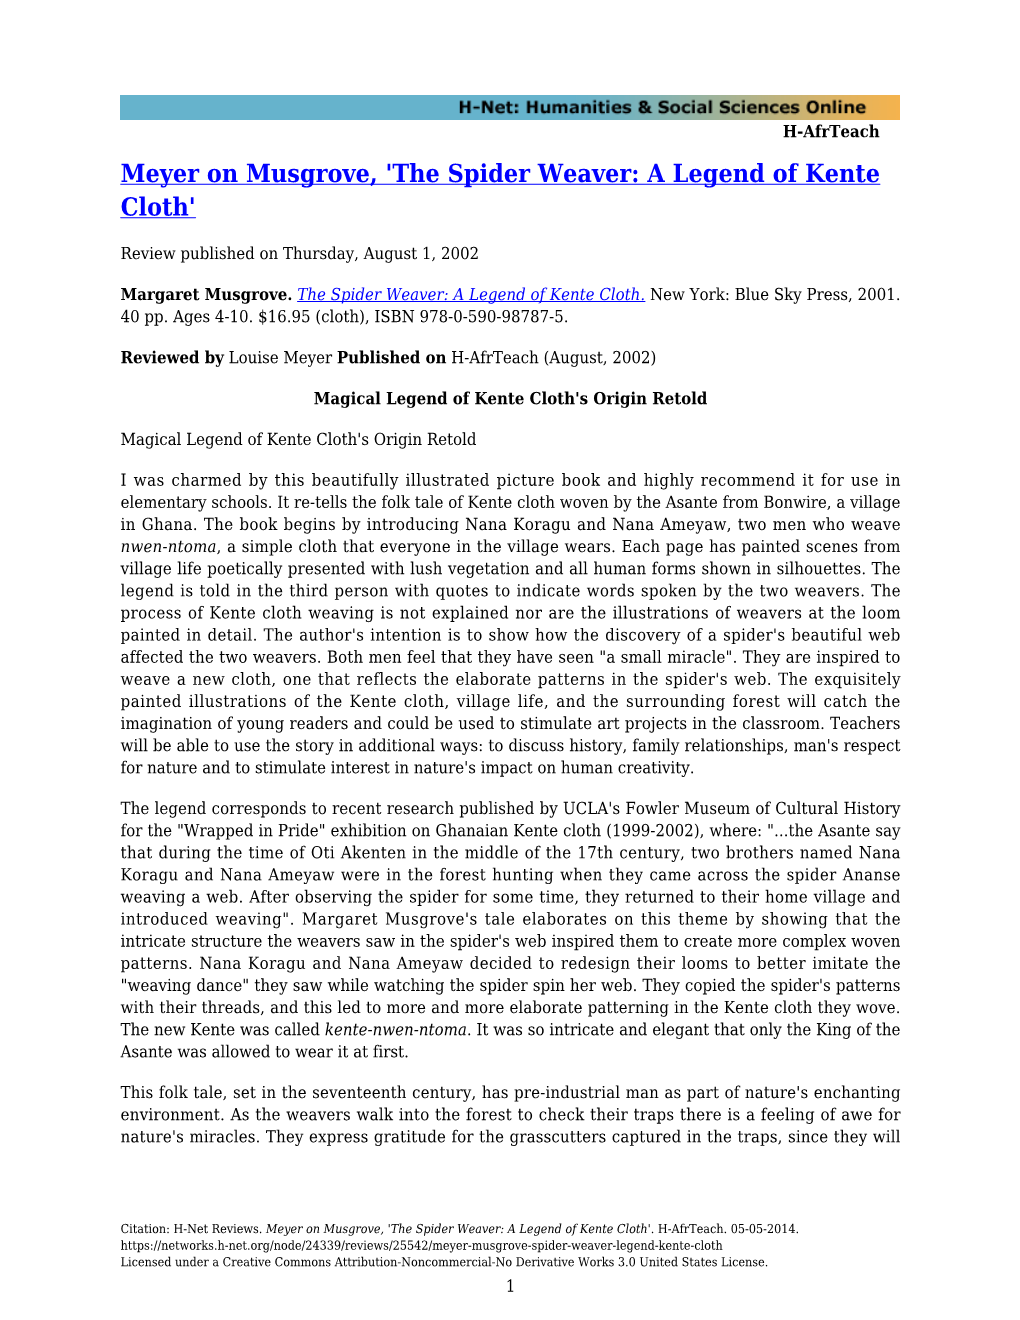 The Spider Weaver: a Legend of Kente Cloth'